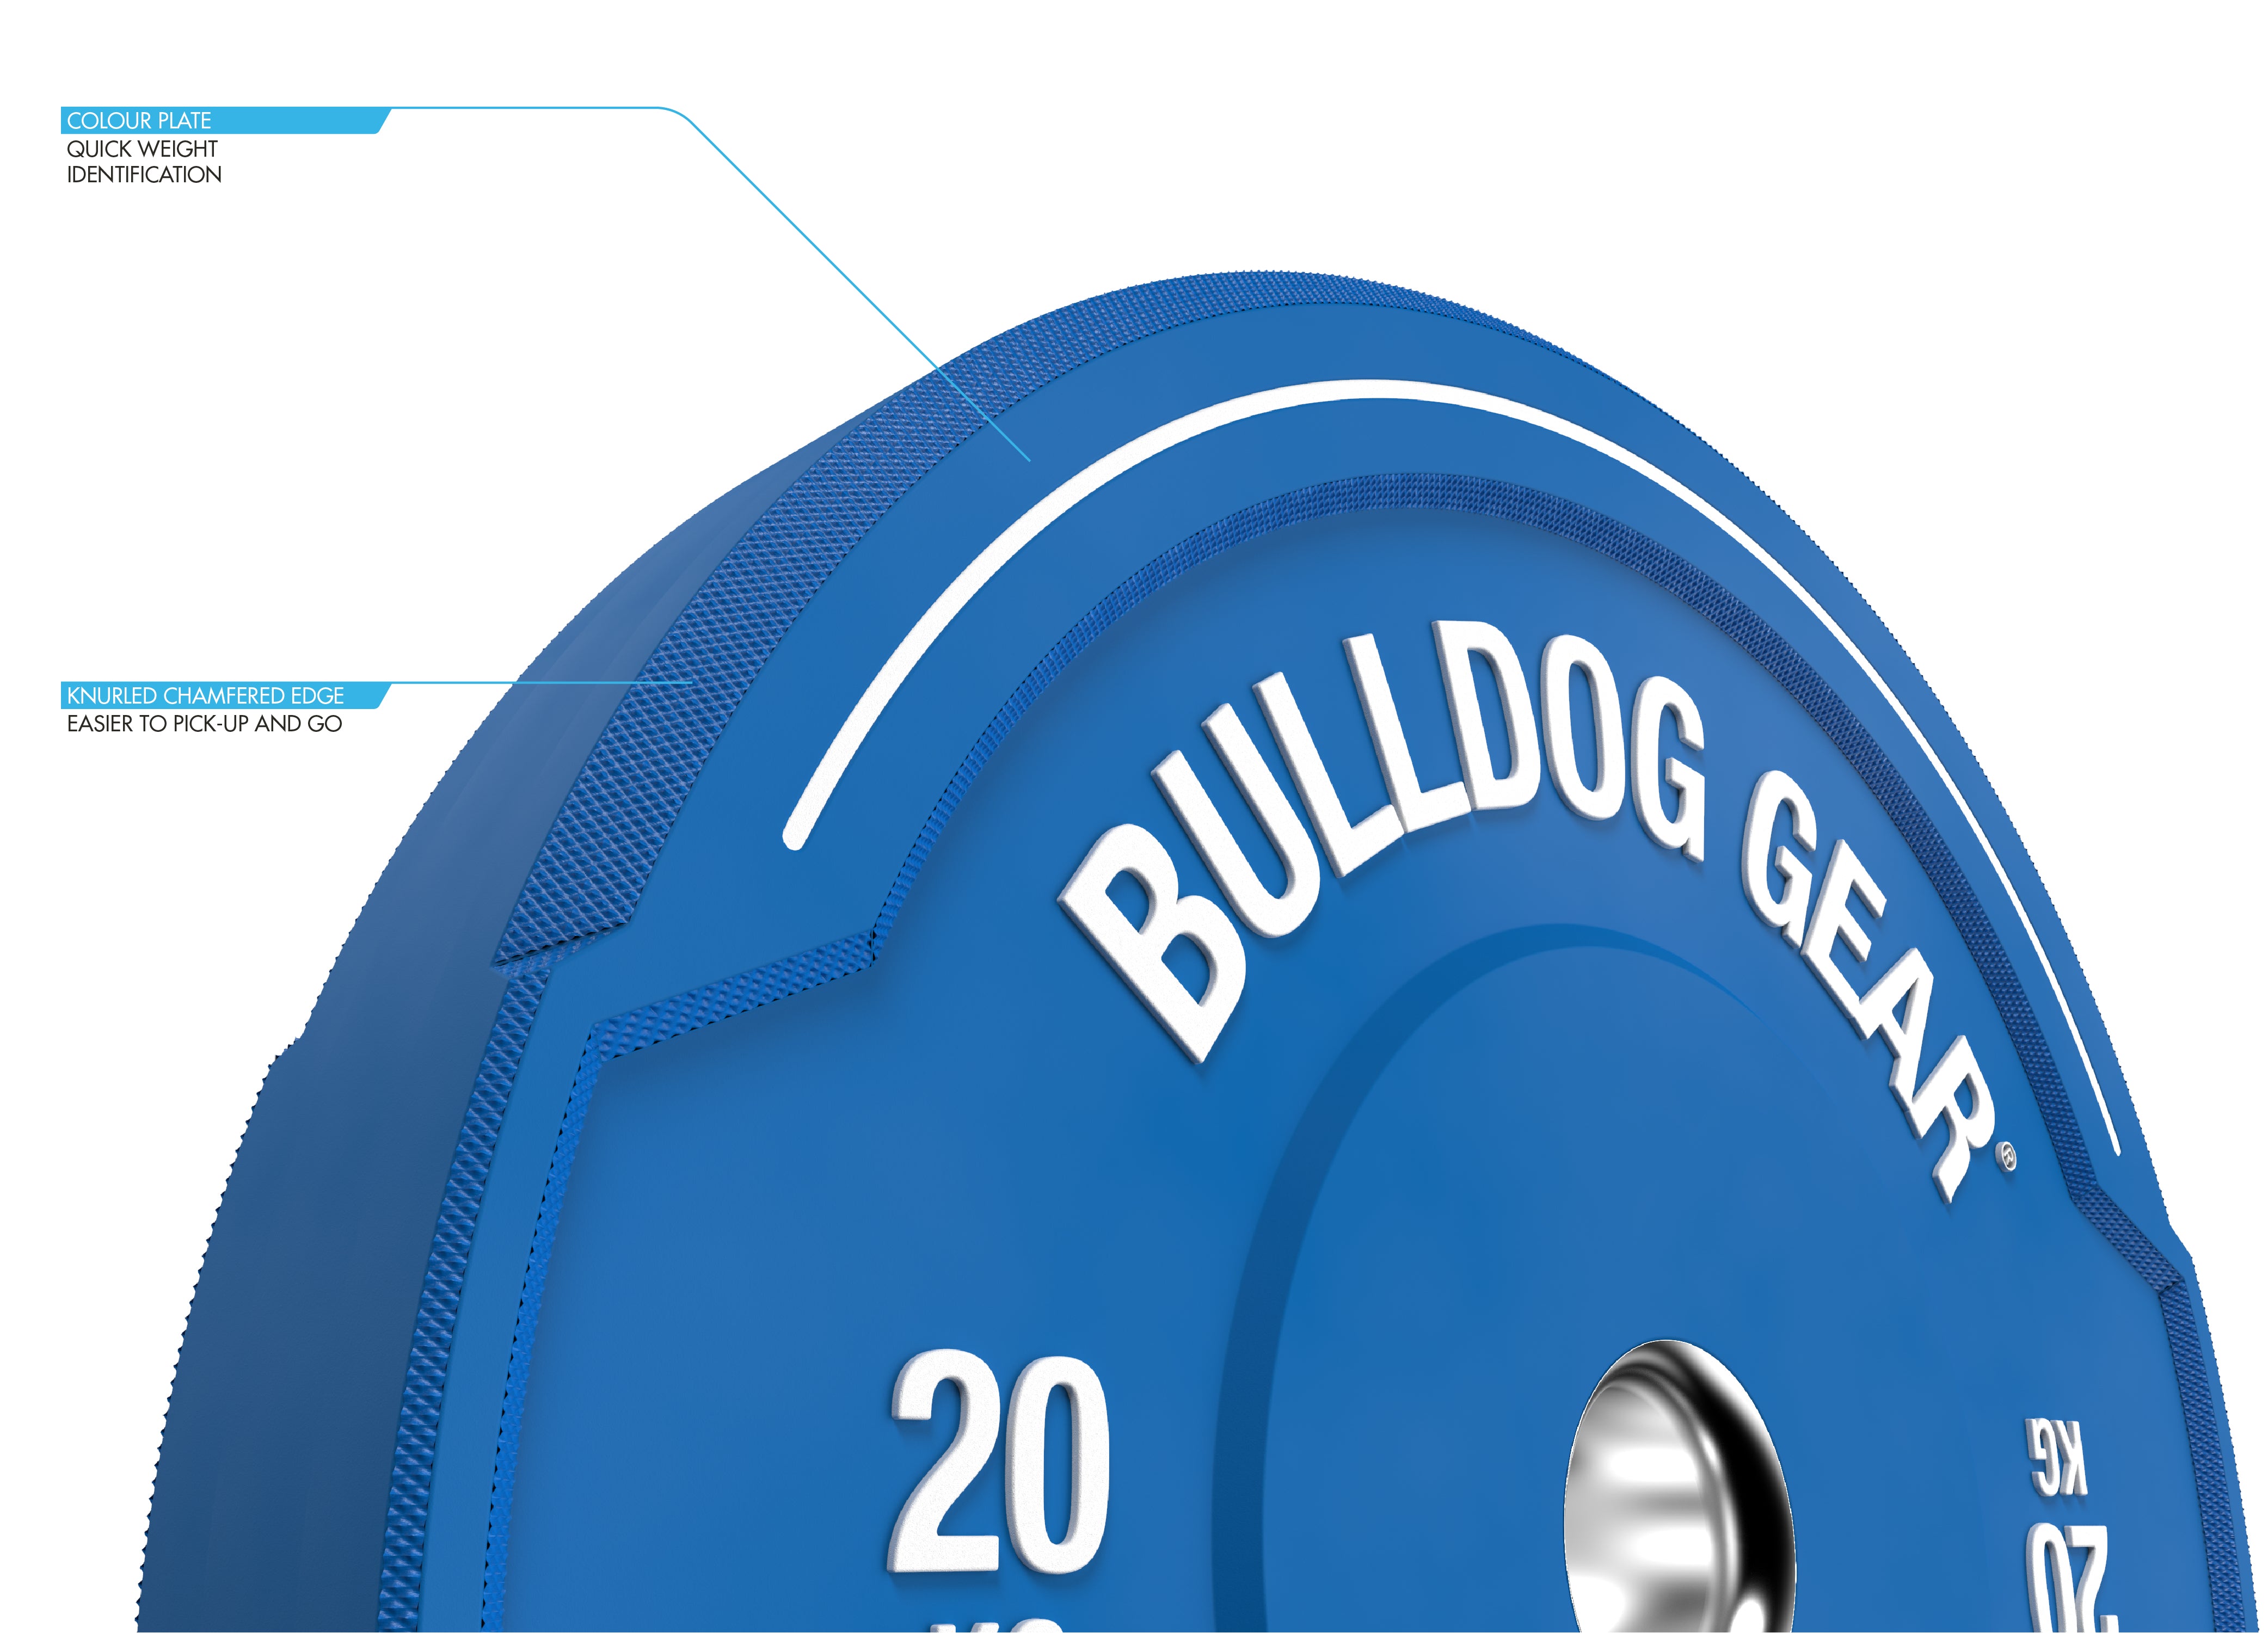 Bulldog Gear - Hybrid 2.0 Colour Rubber Bumper Plates